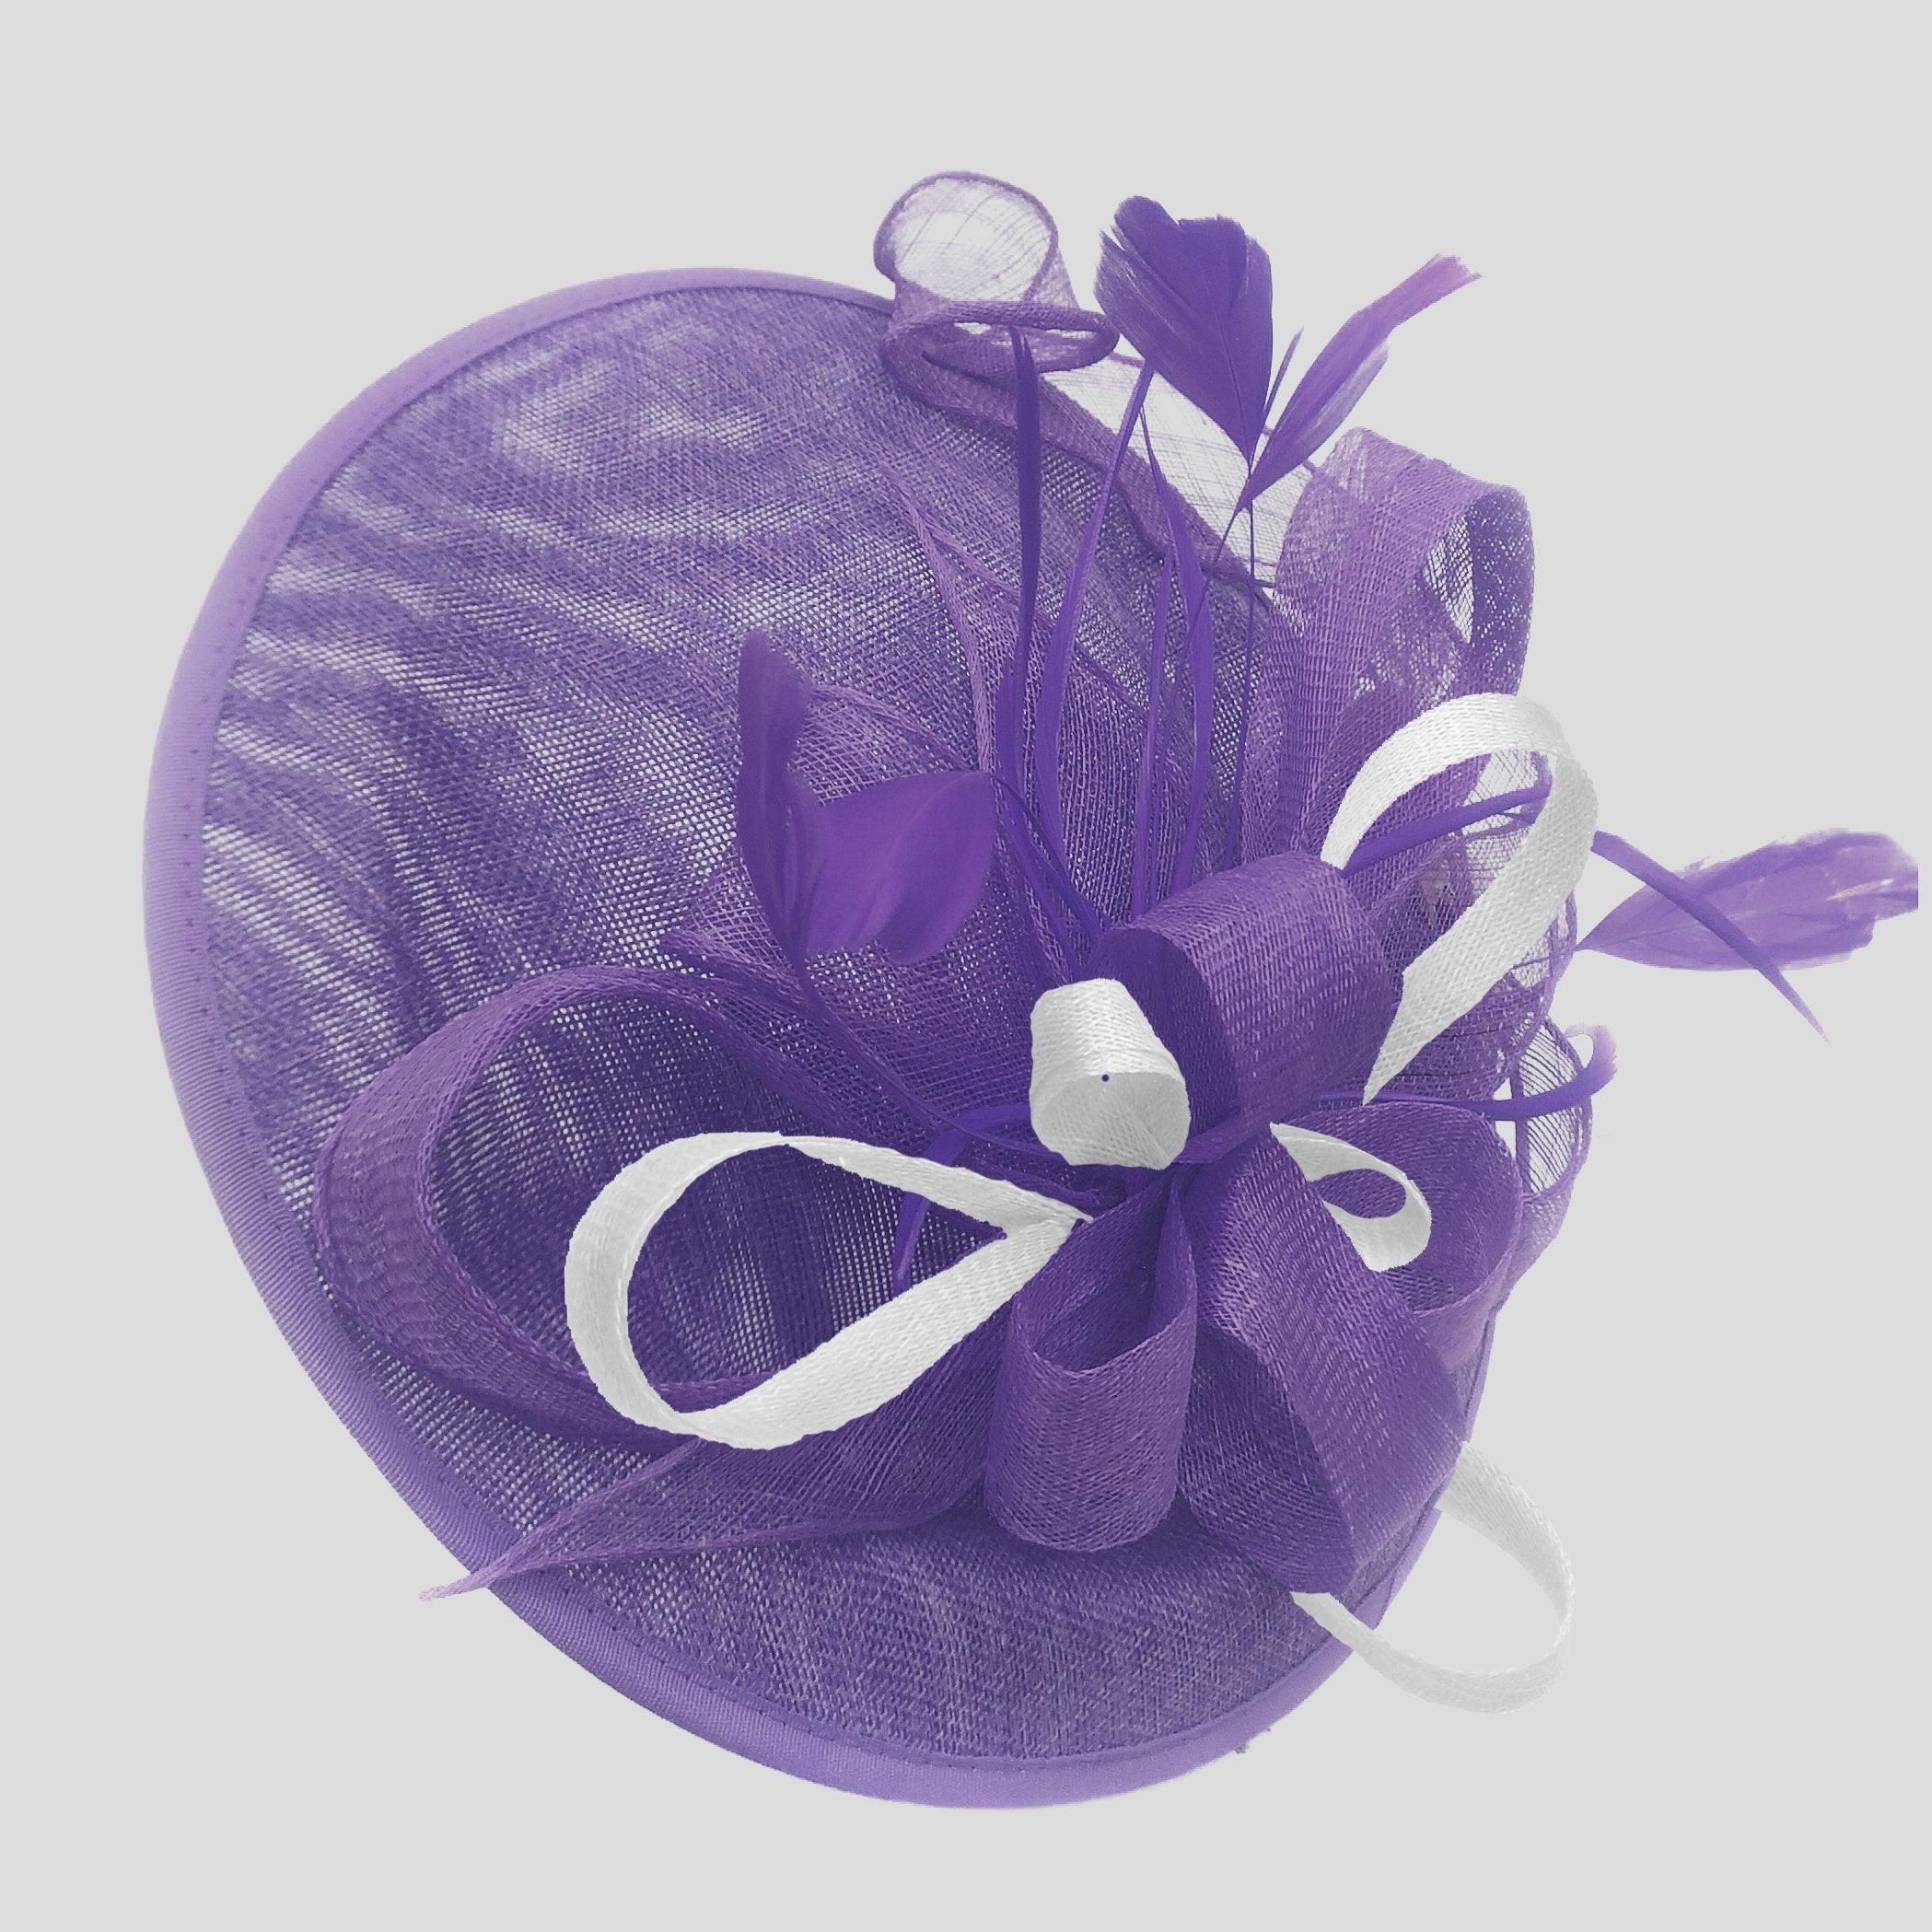 Caprilite Big Saucer Sinamay Lavender Purple & White Mixed Colour Fascinator On Headband